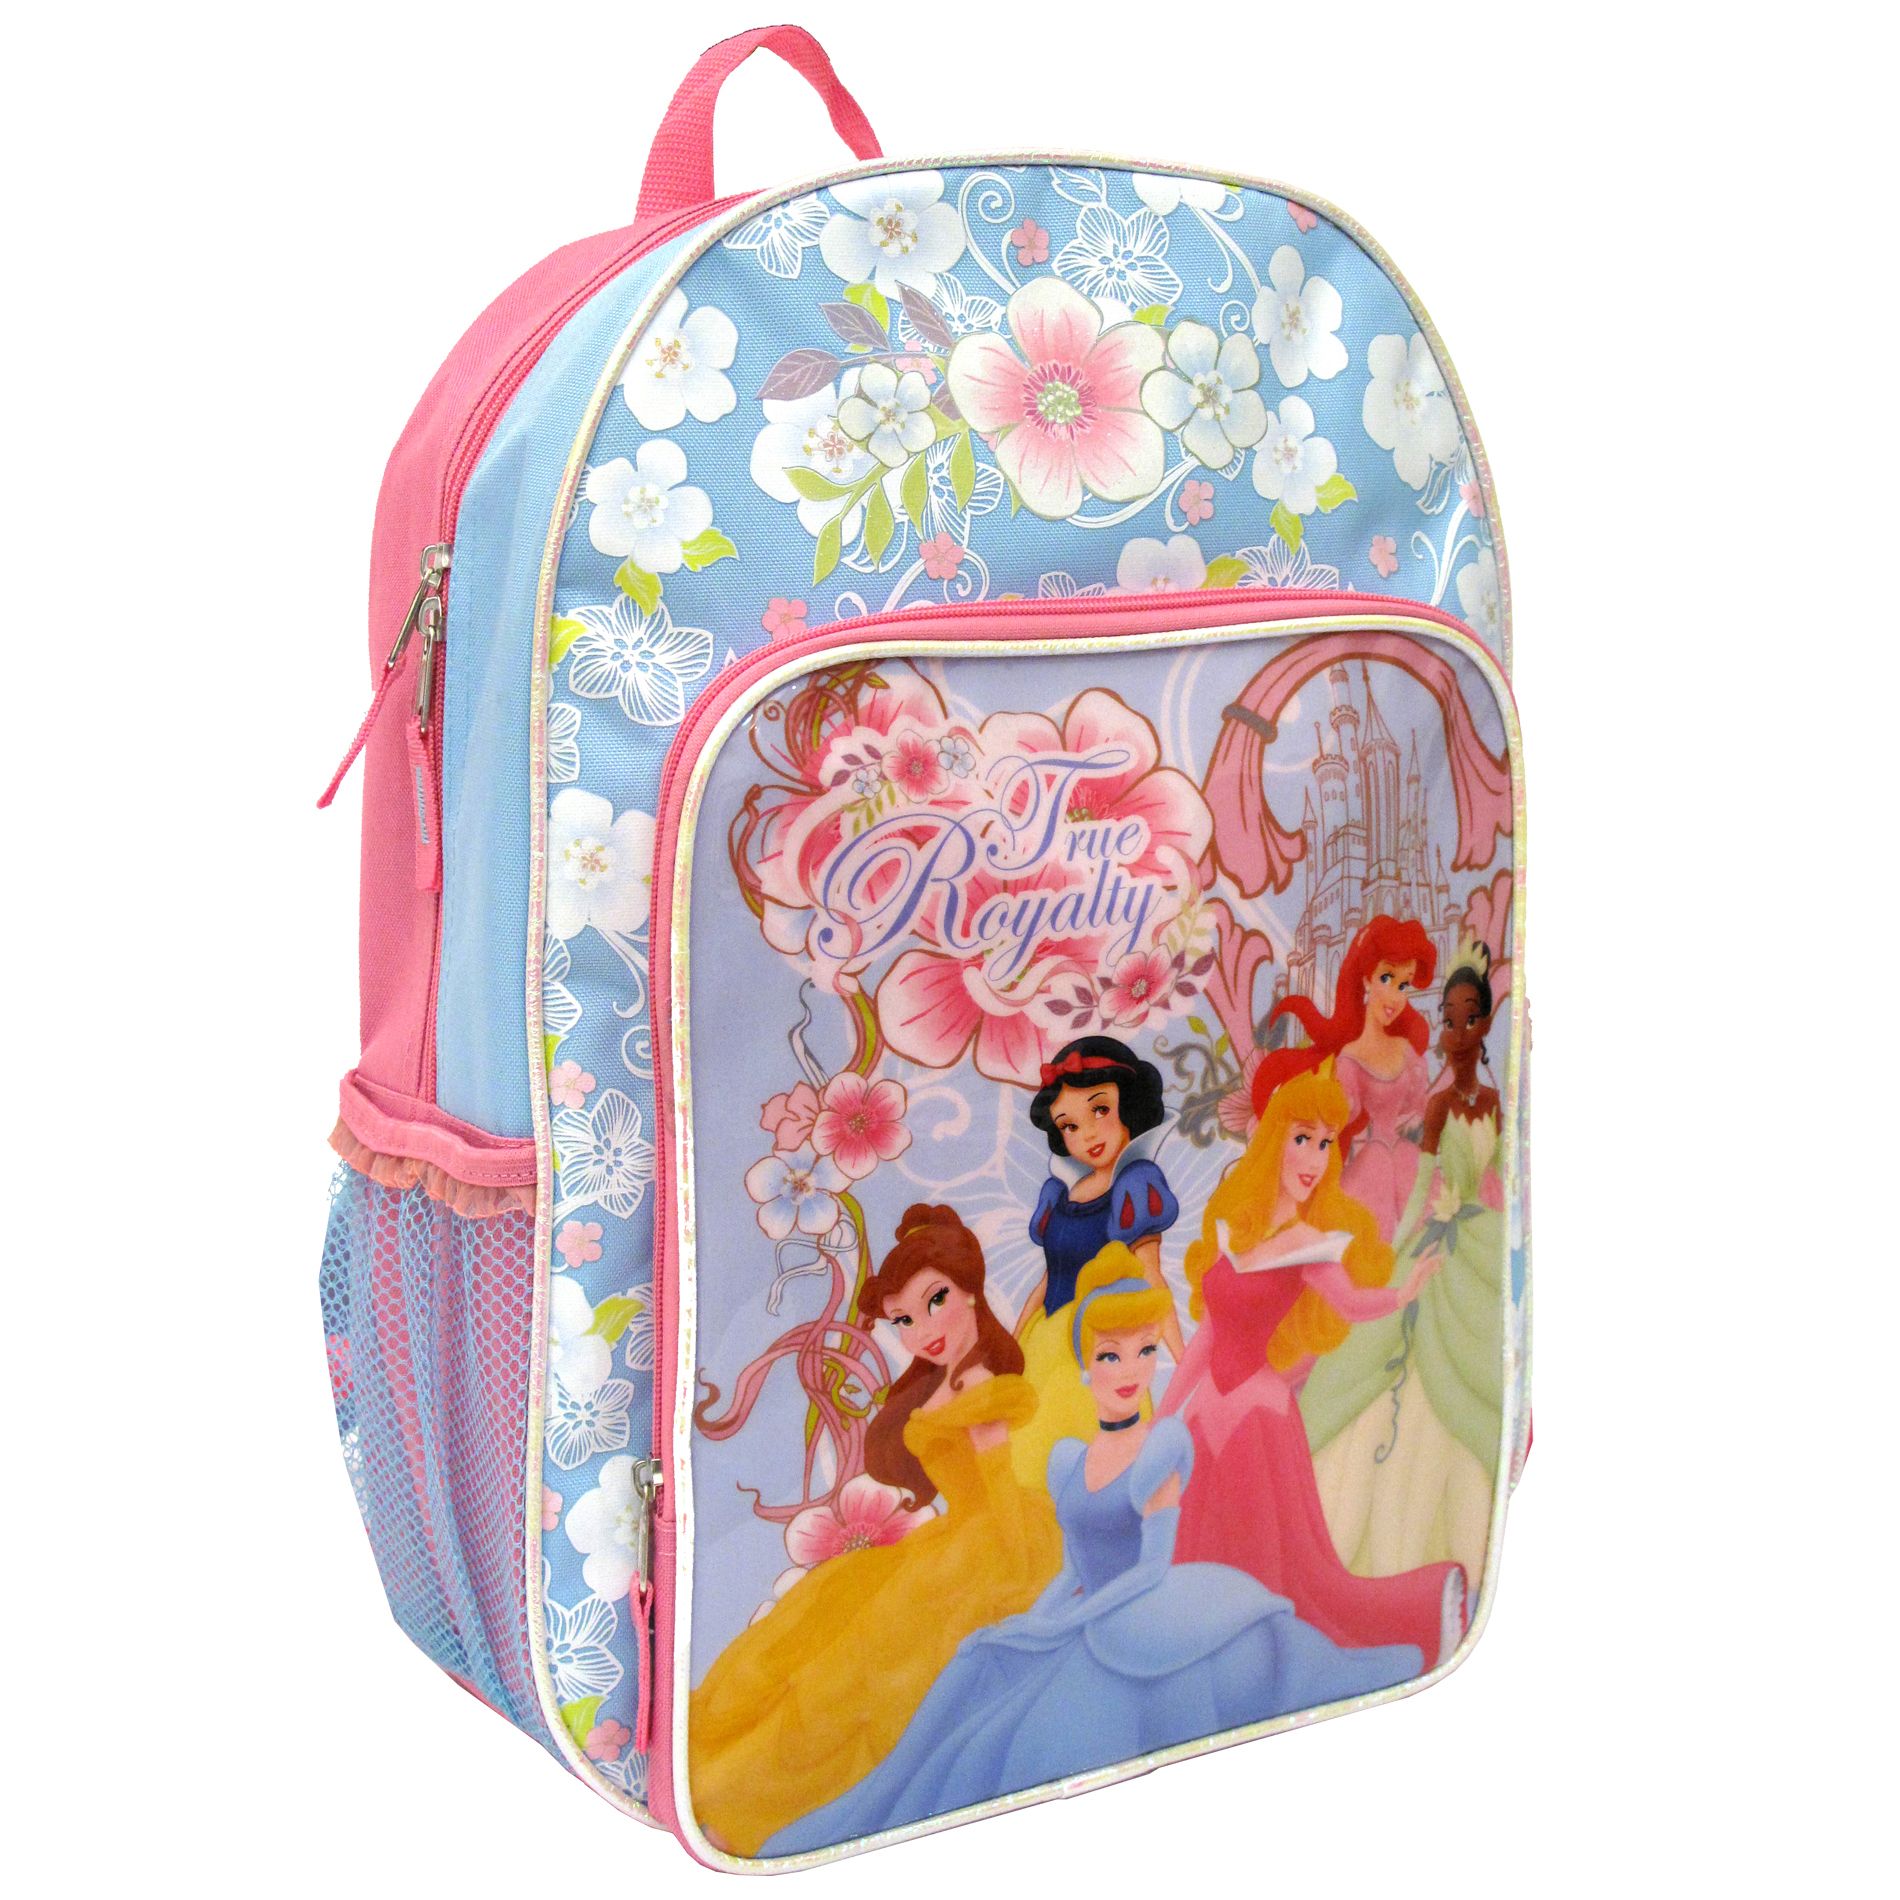 Kids Charter Disney Princess Light Up Princess Backpack